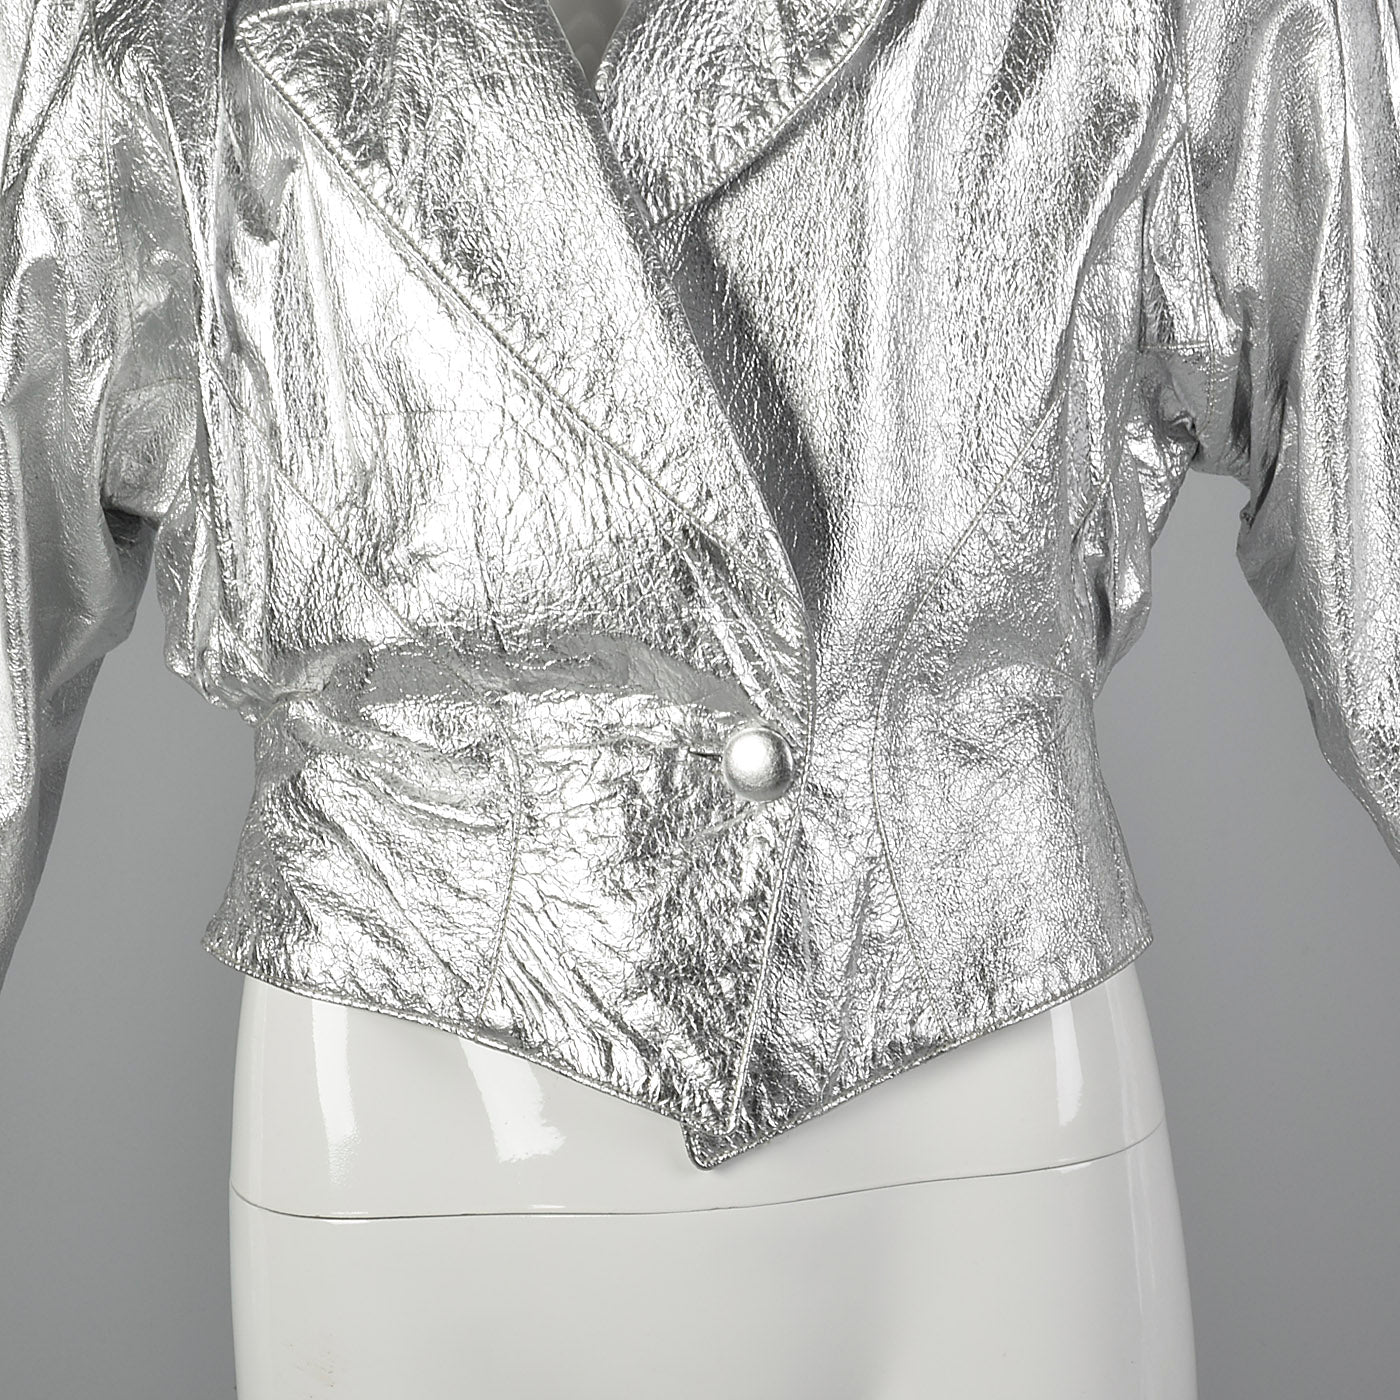 1980s Lillie Rubin Metallic Silver Jacket